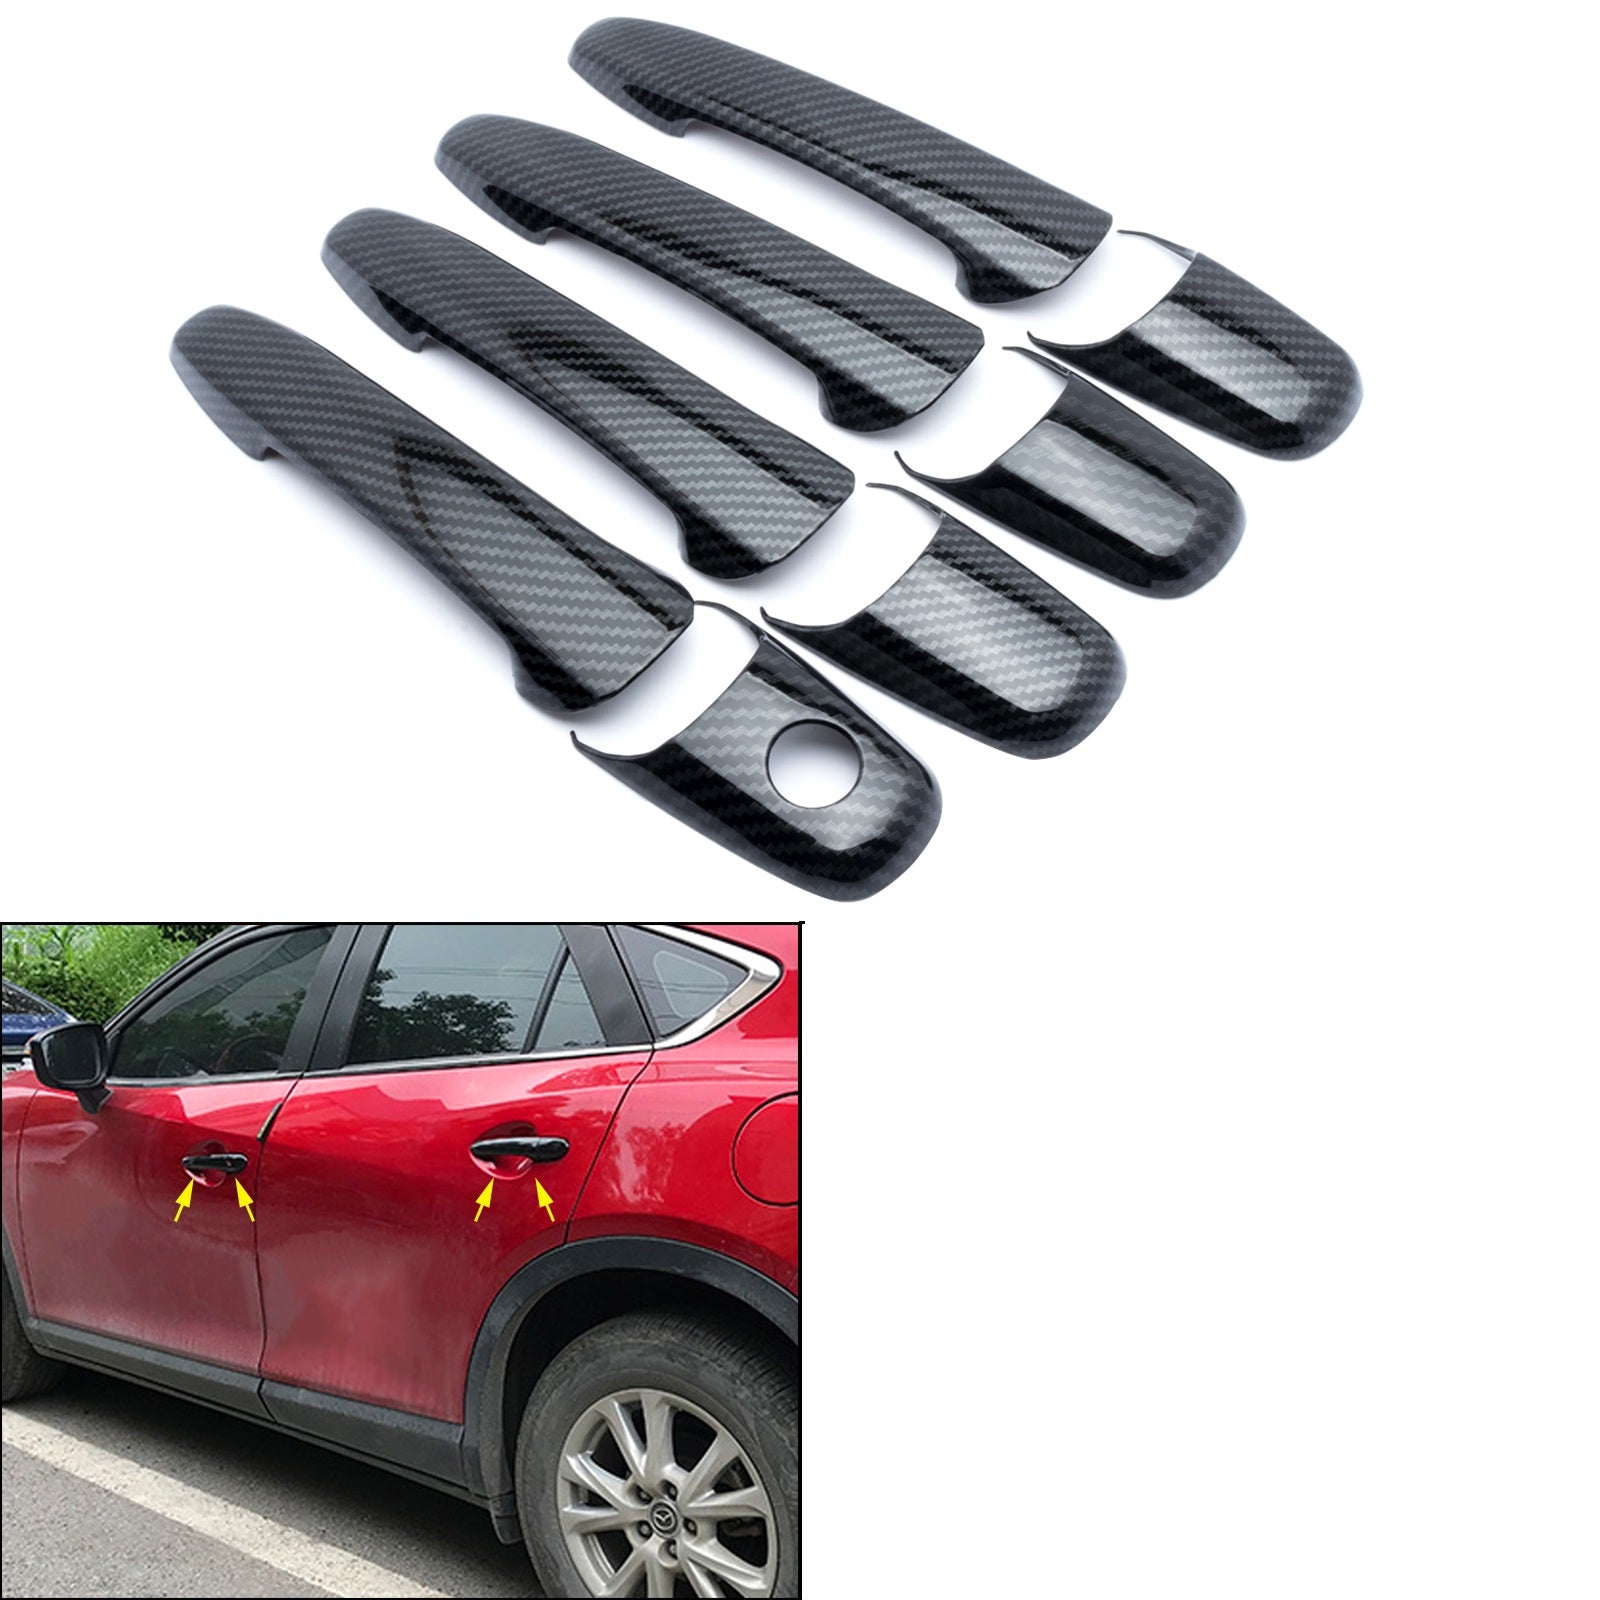 New Carbon Fiber Look Car Door Handle Protector Cover Trim for Mazda 2